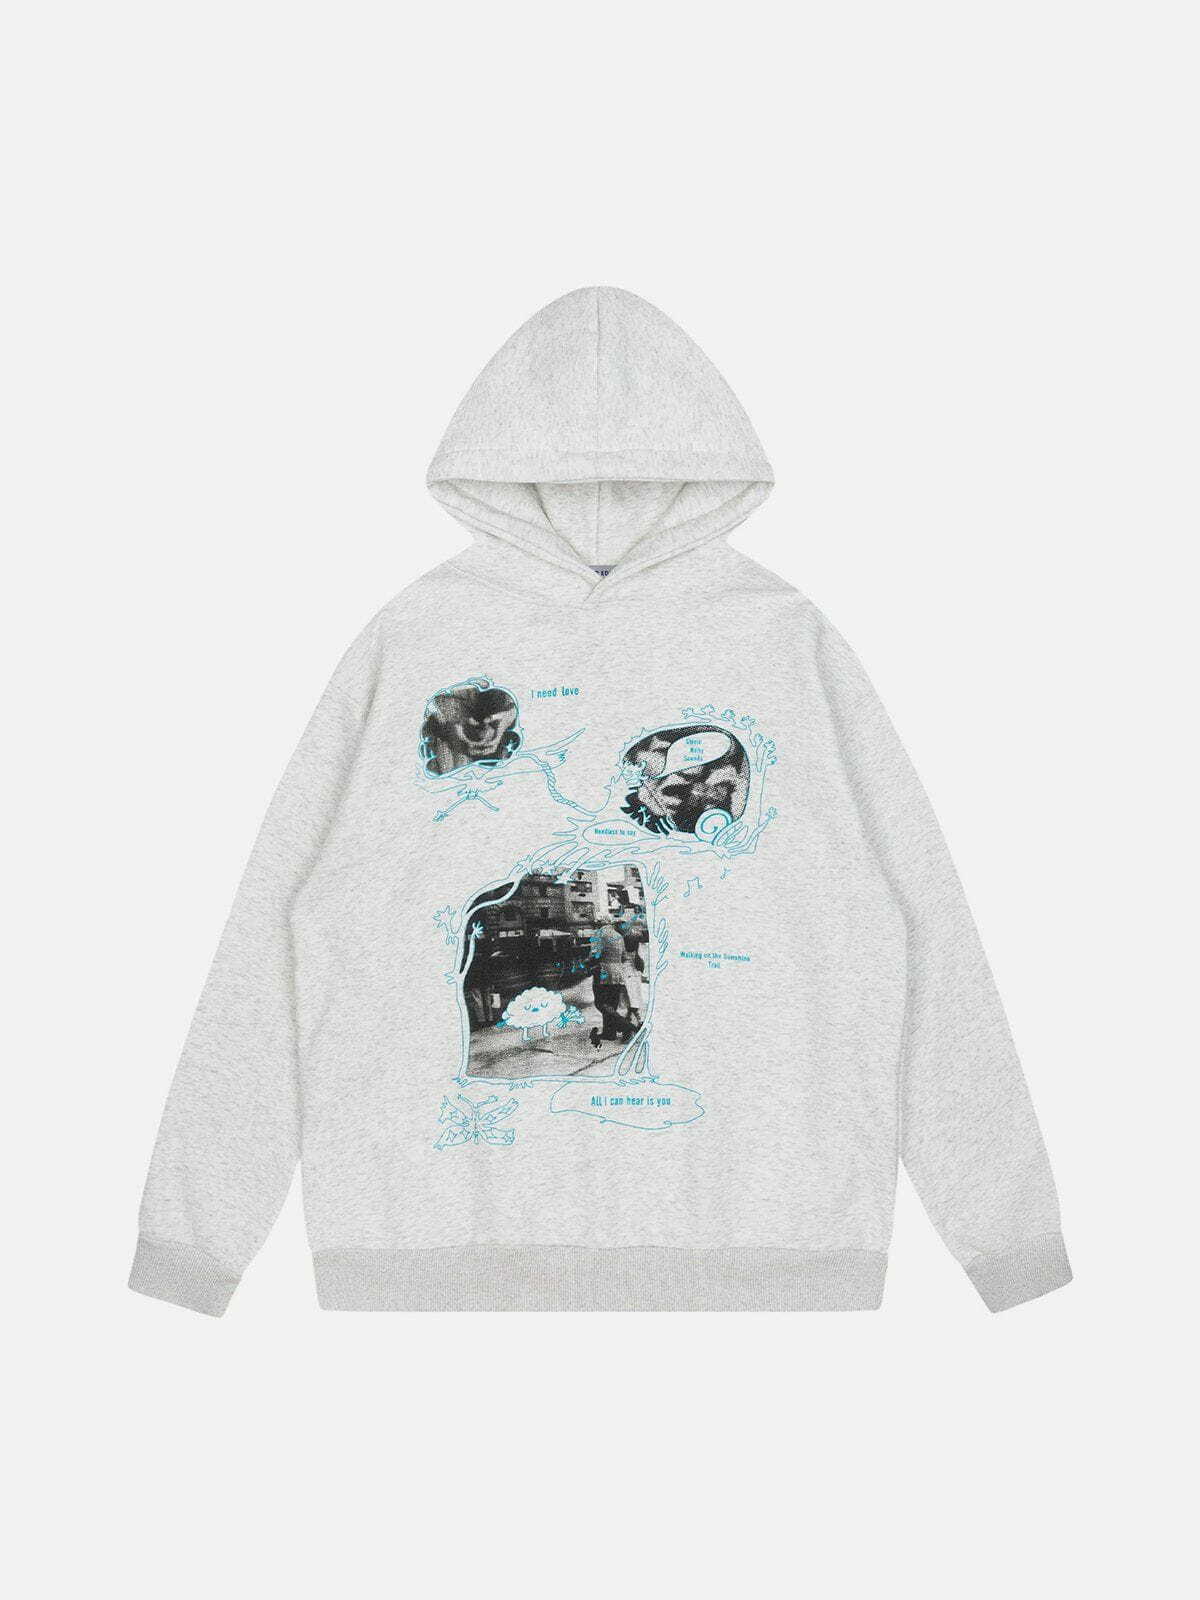 edgy black & white print hoodie   urban chic pullover 2339